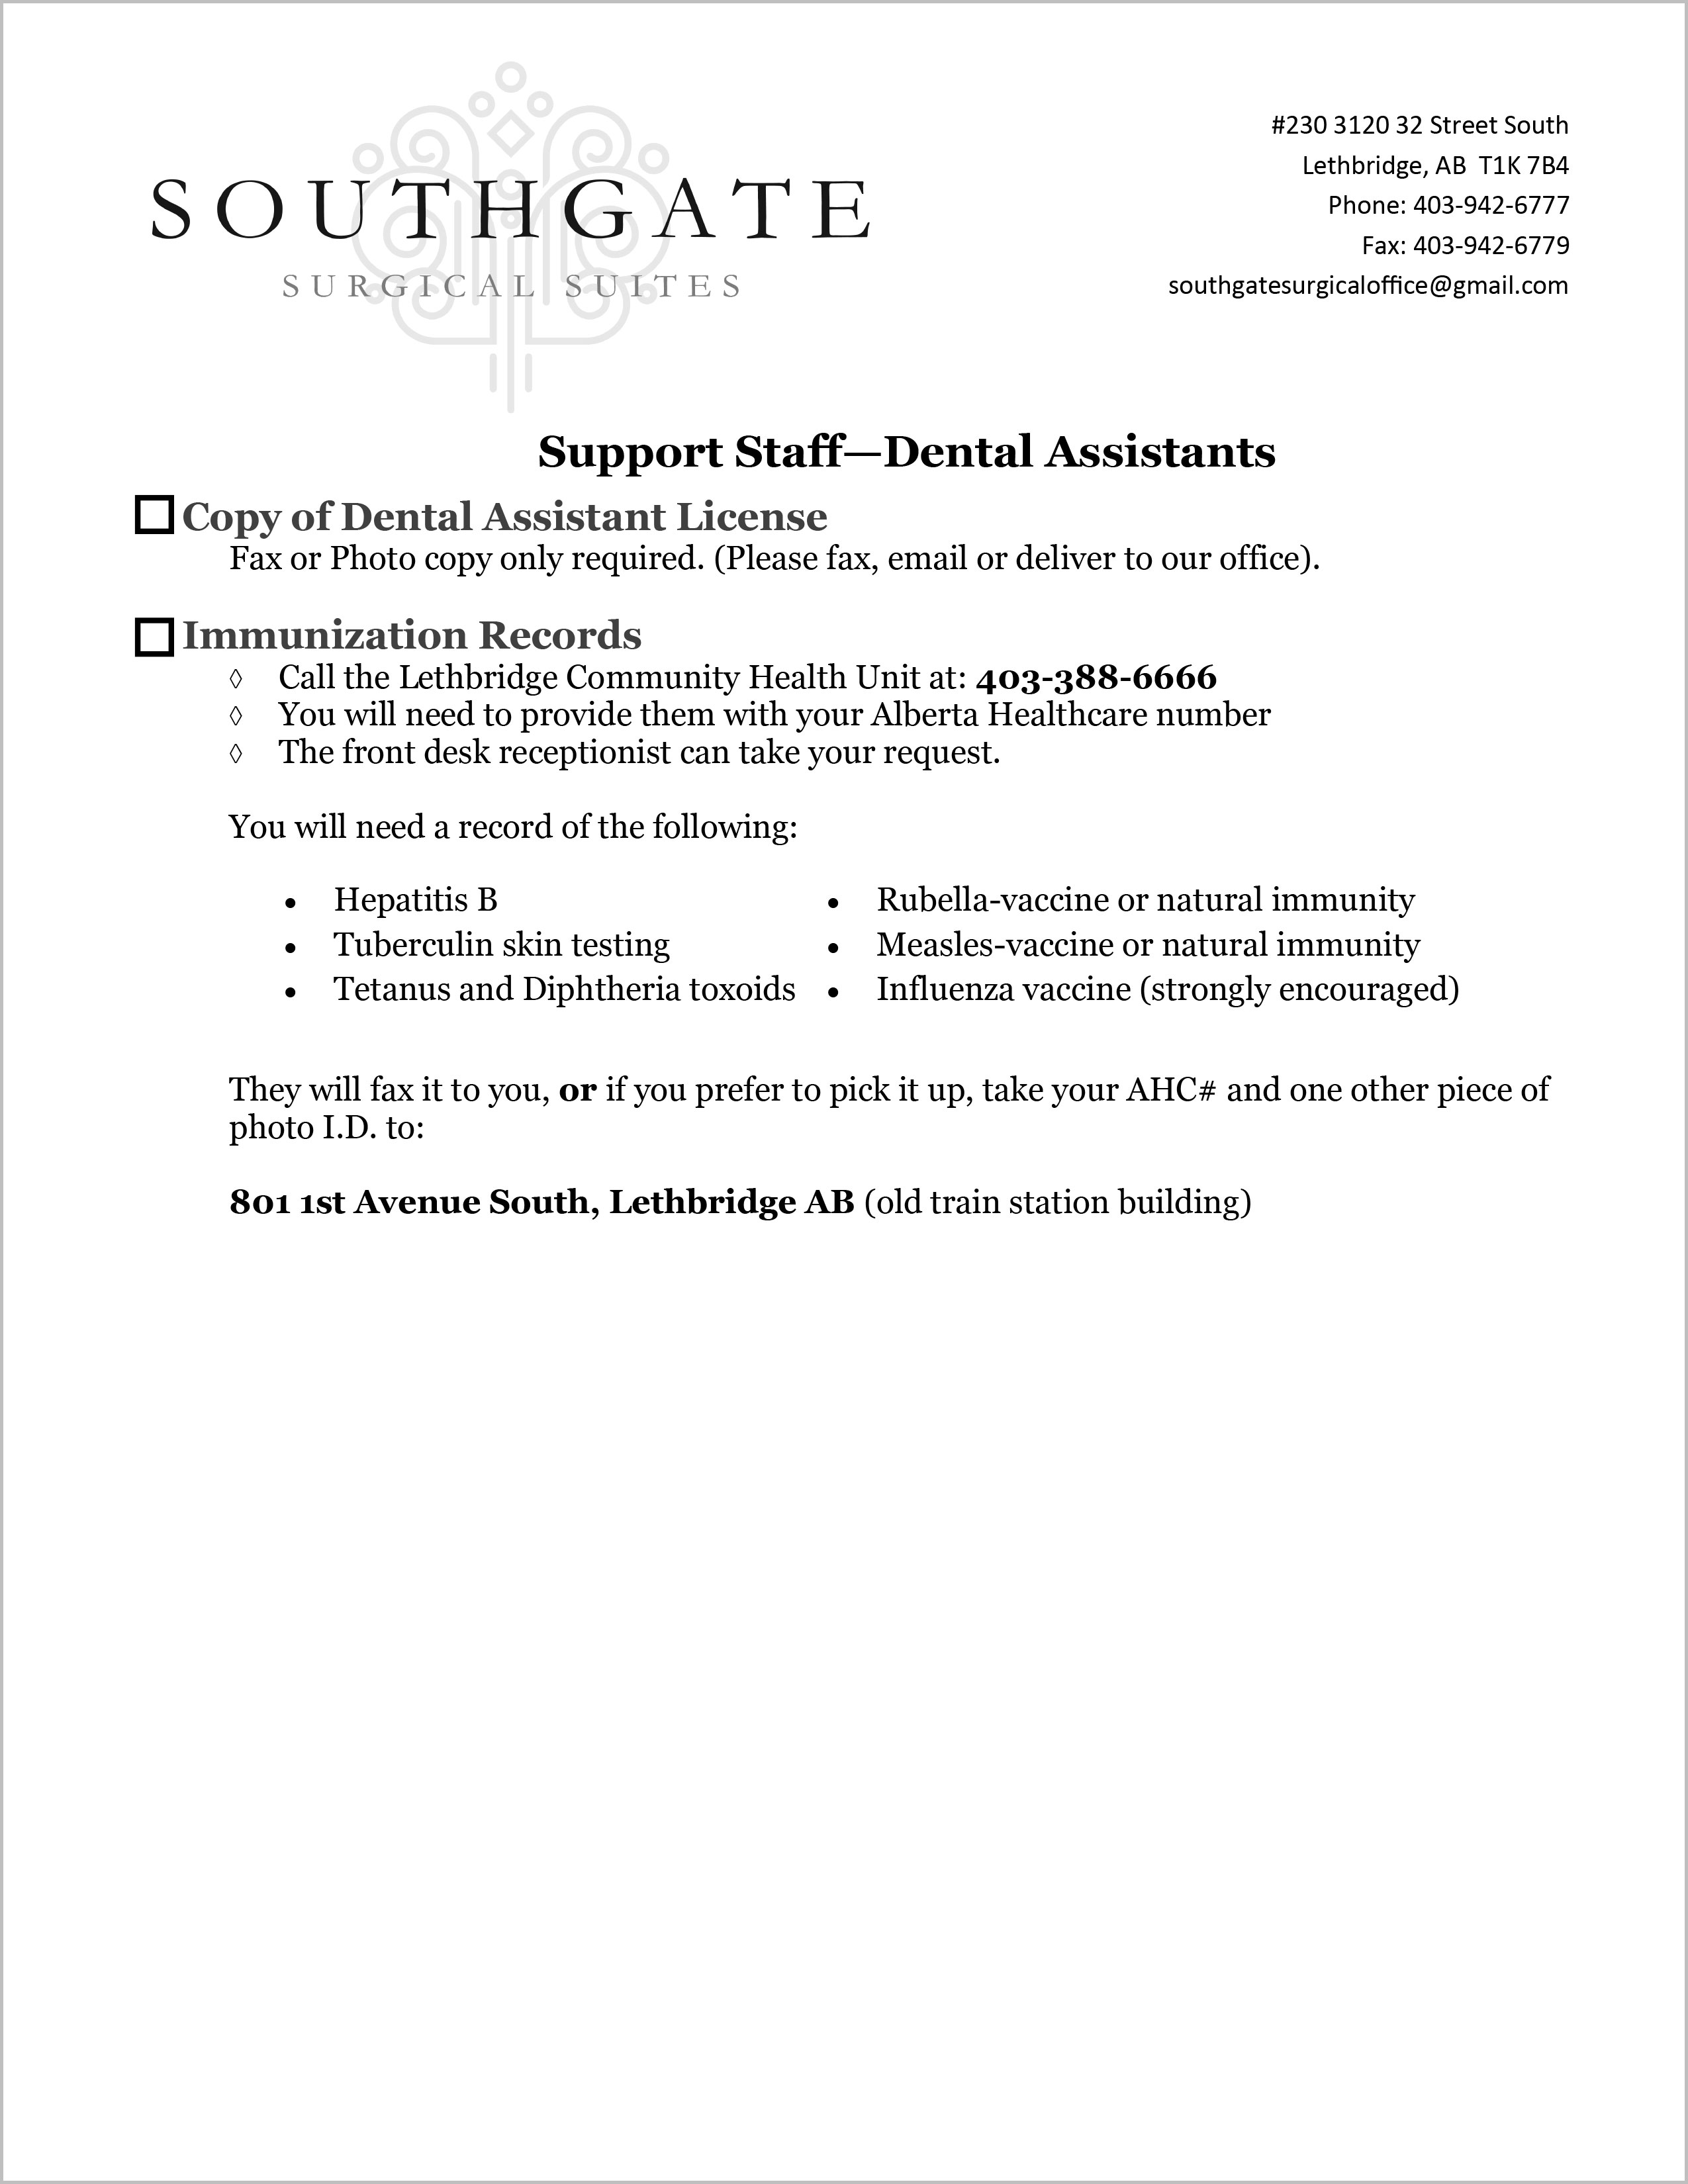 Staff Dental Assistants Form | Southgate Surgical Suites